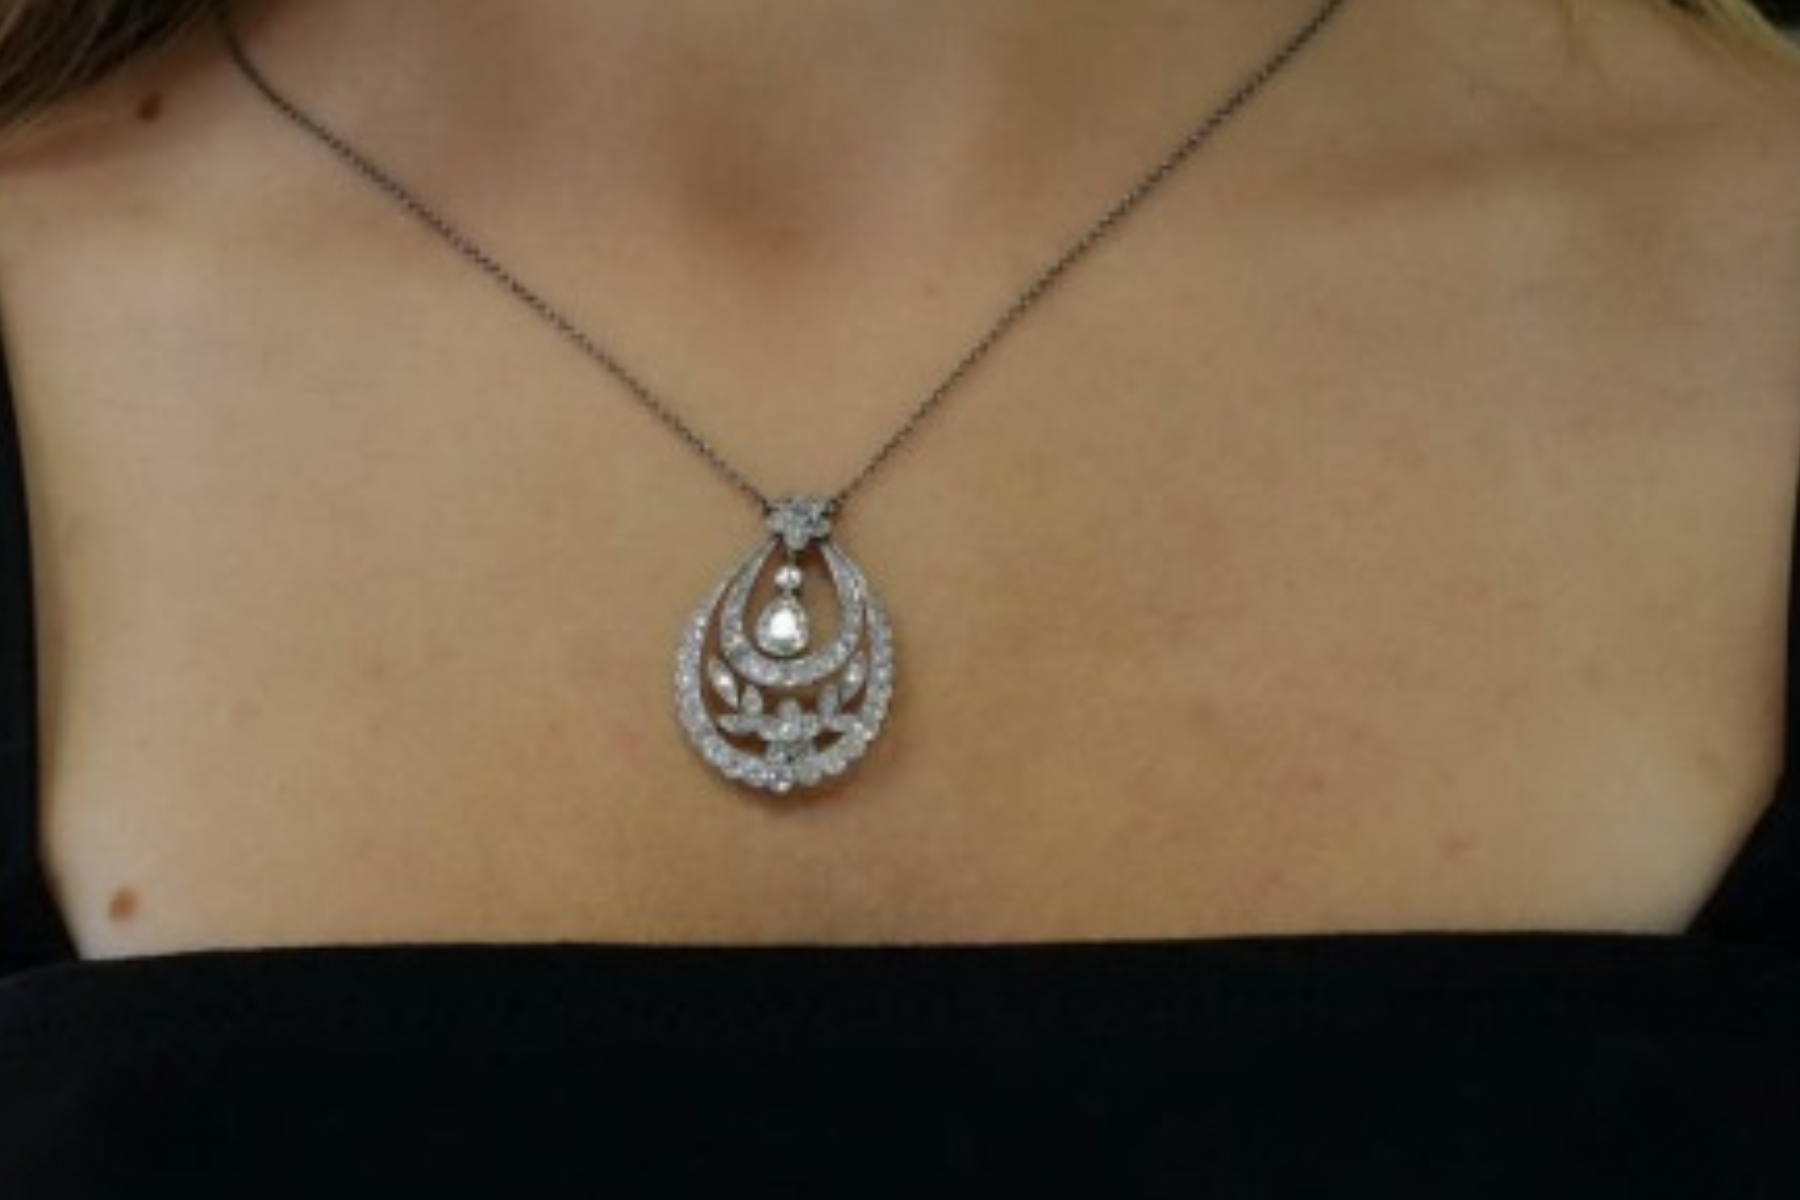 A lady wearing an Edwardian necklace